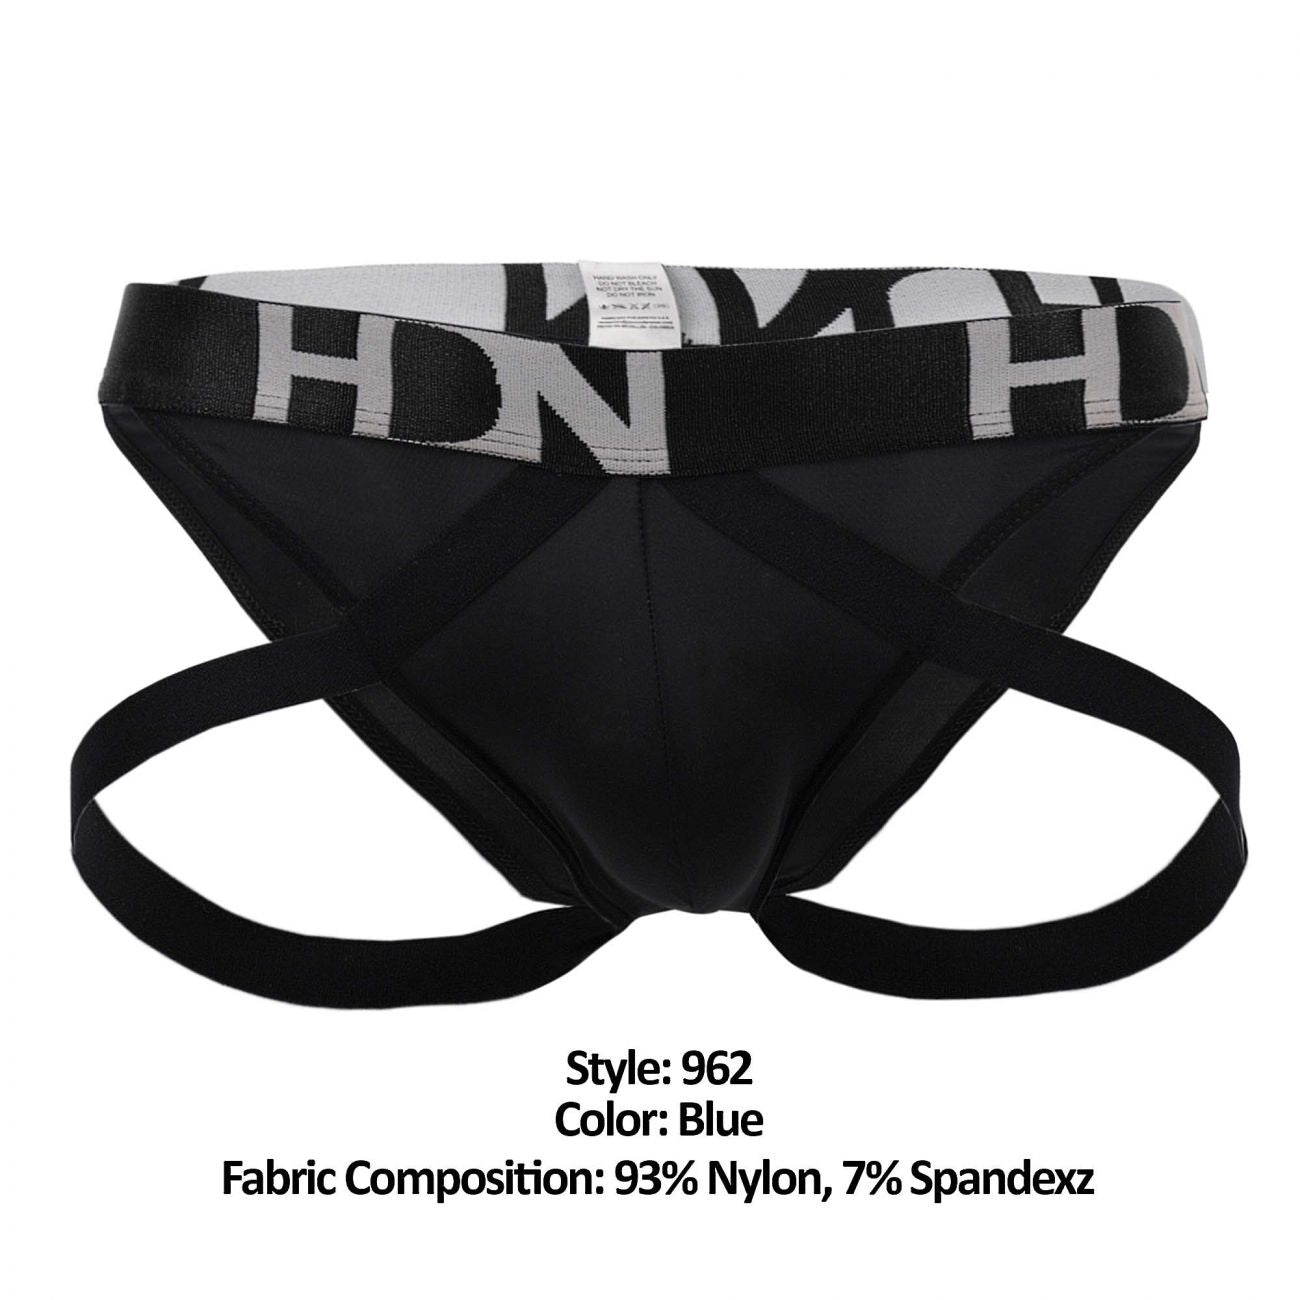 Hidden 962 Jockstrap-Bikini Color Black